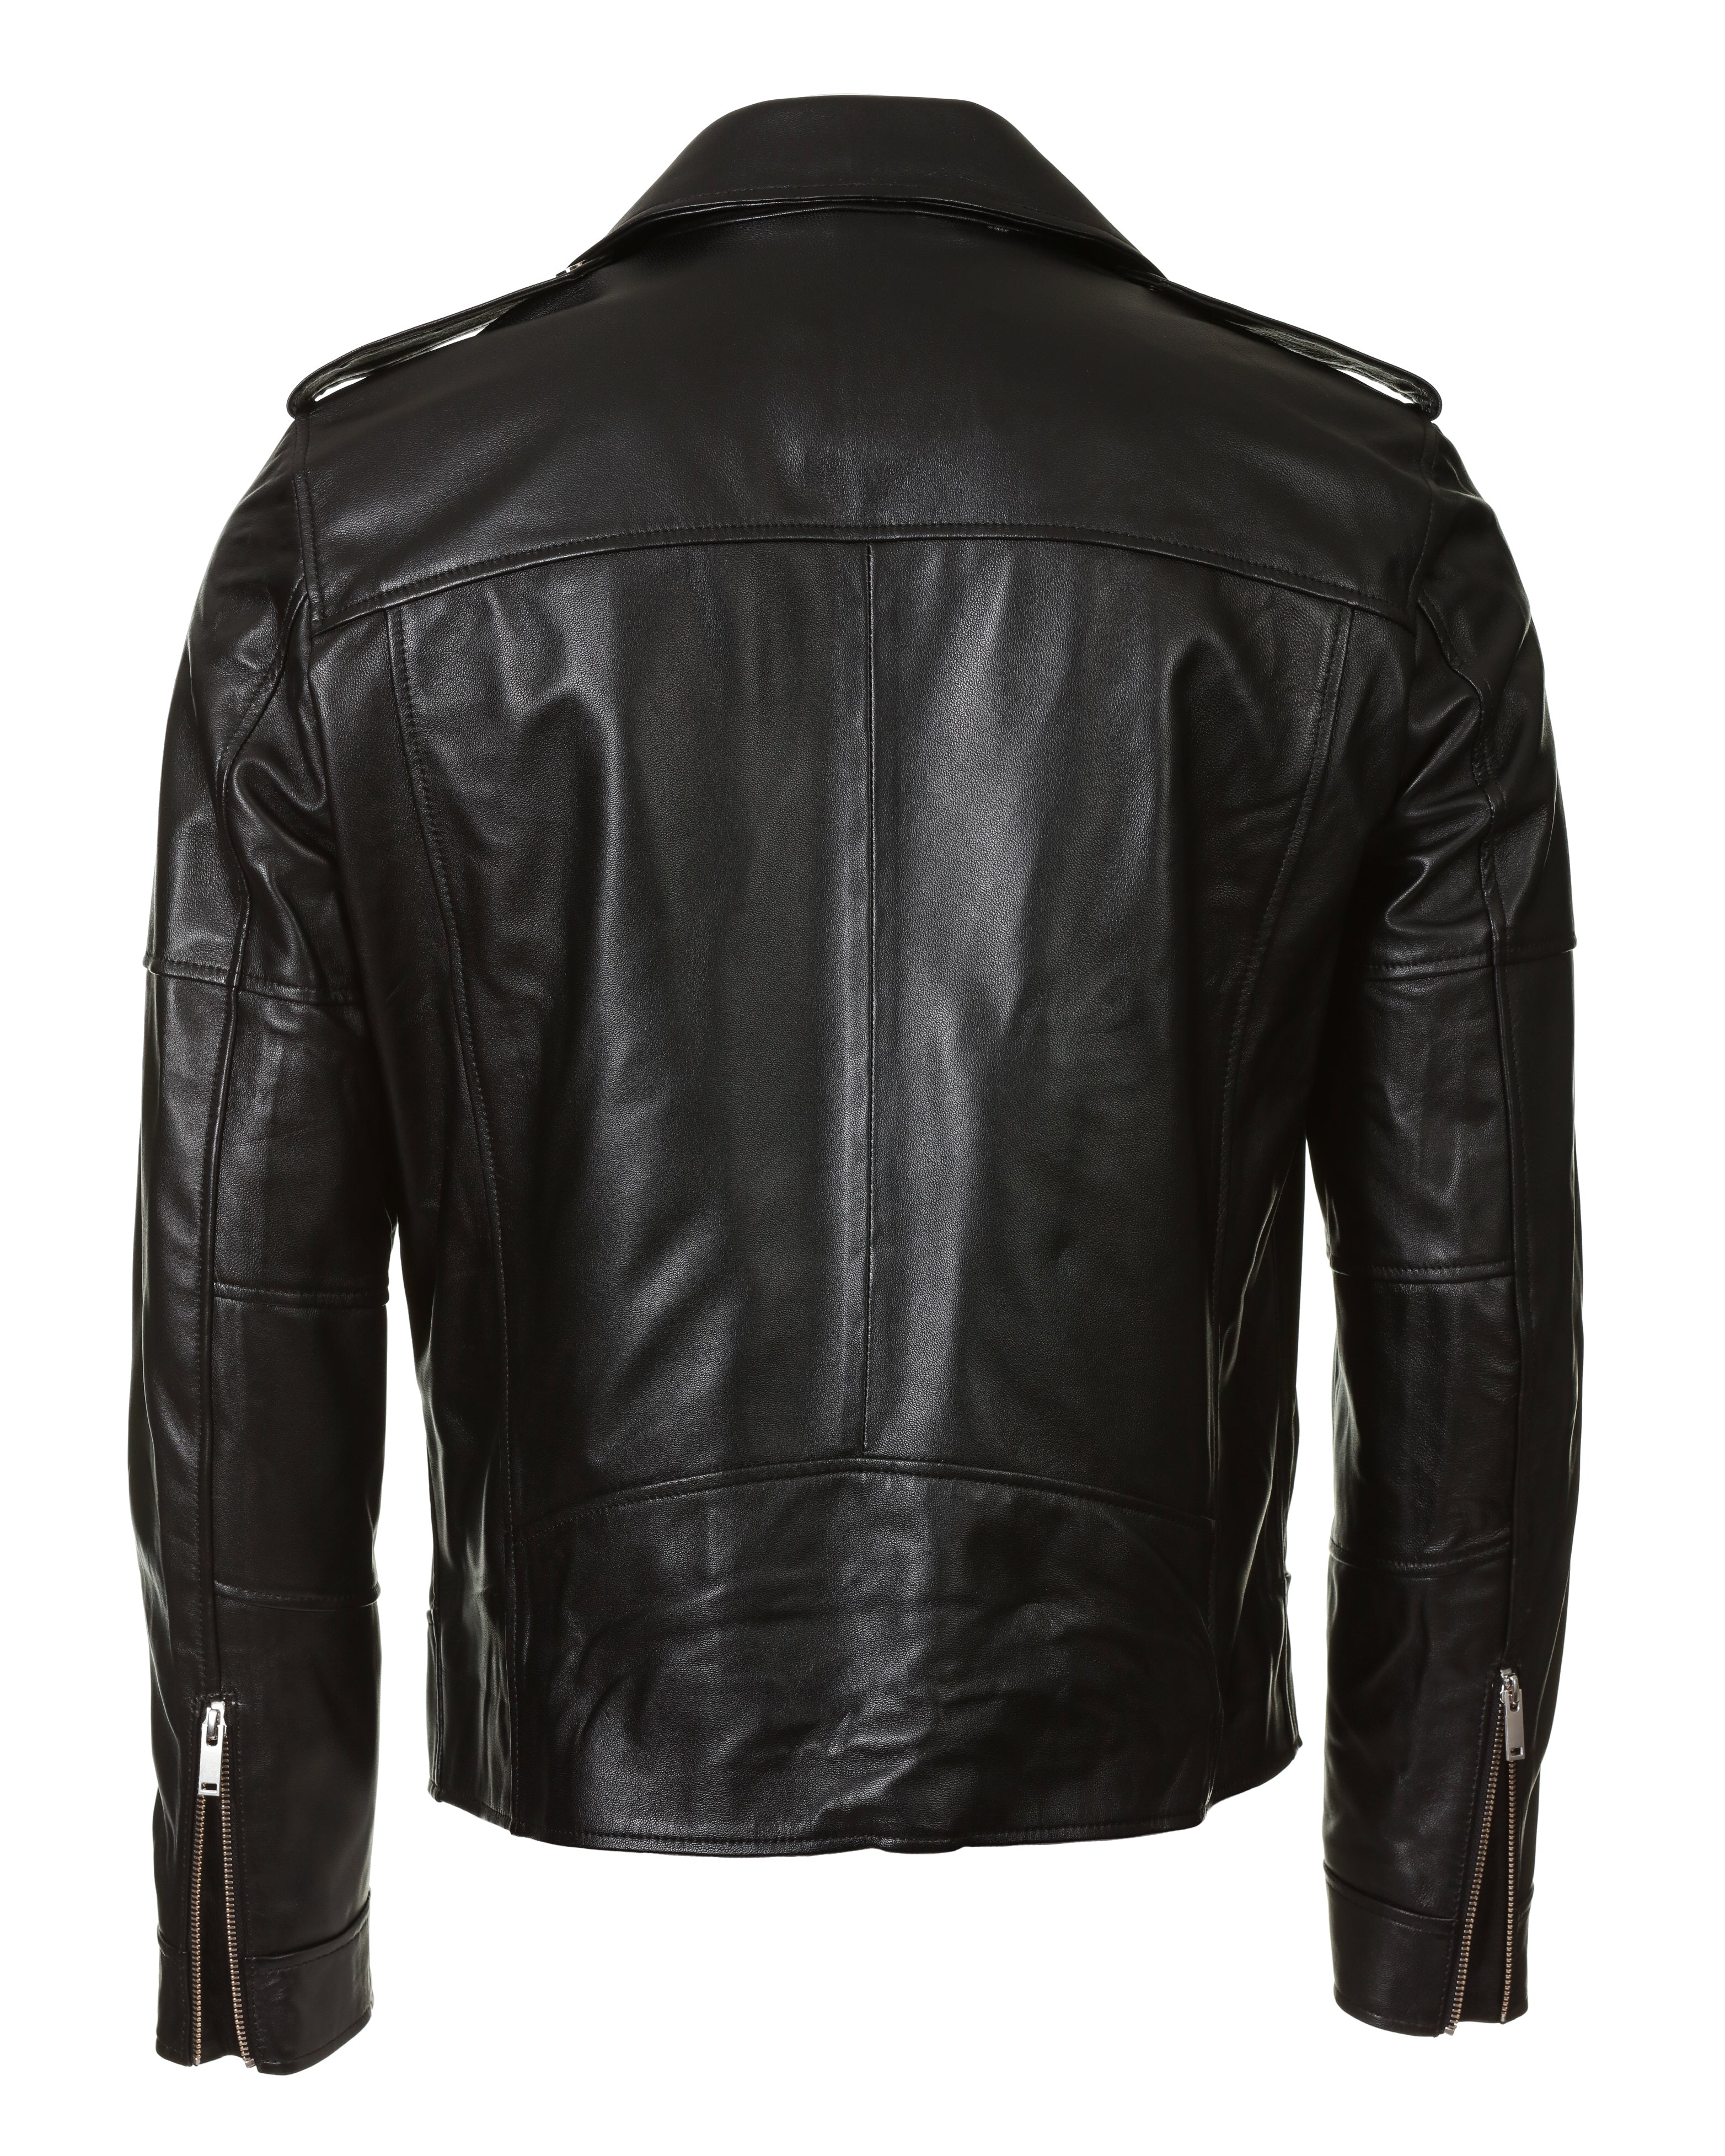 Lambskin Leather Jacket - Black Studs - Leather Jacket by Urbbana